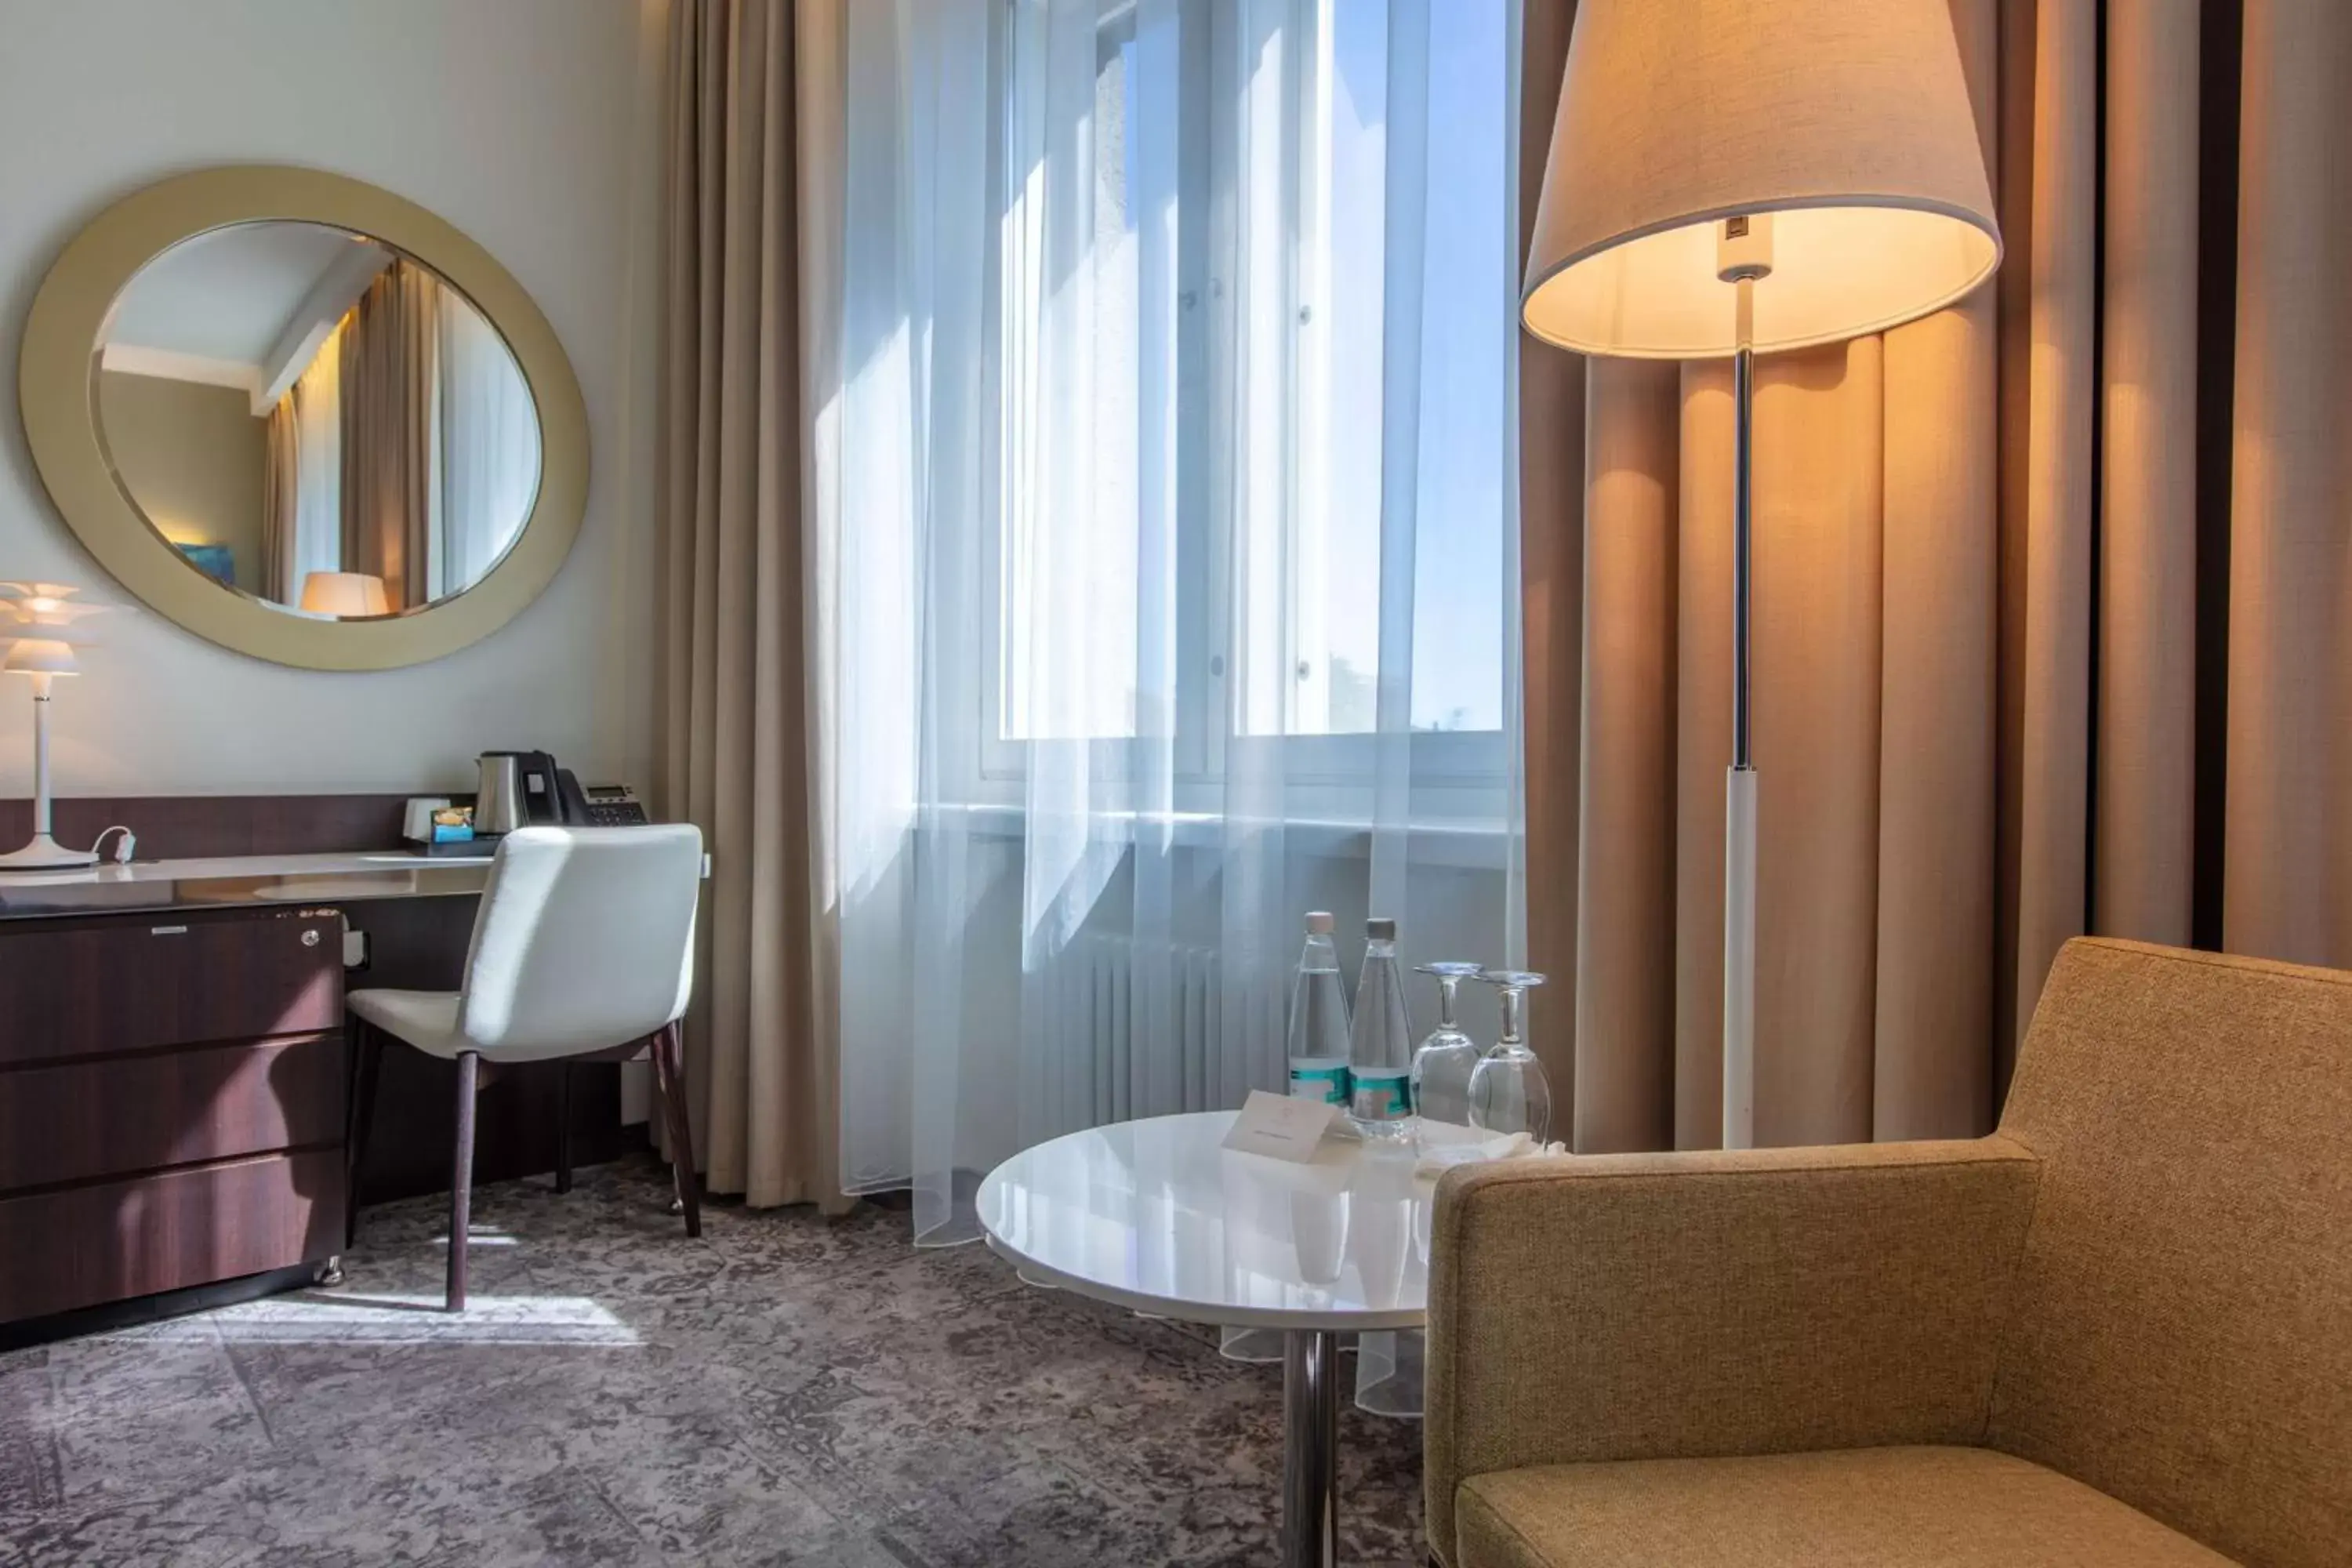 Bedroom, Bathroom in Palace Hotel Tallinn, a member of Radisson Individuals